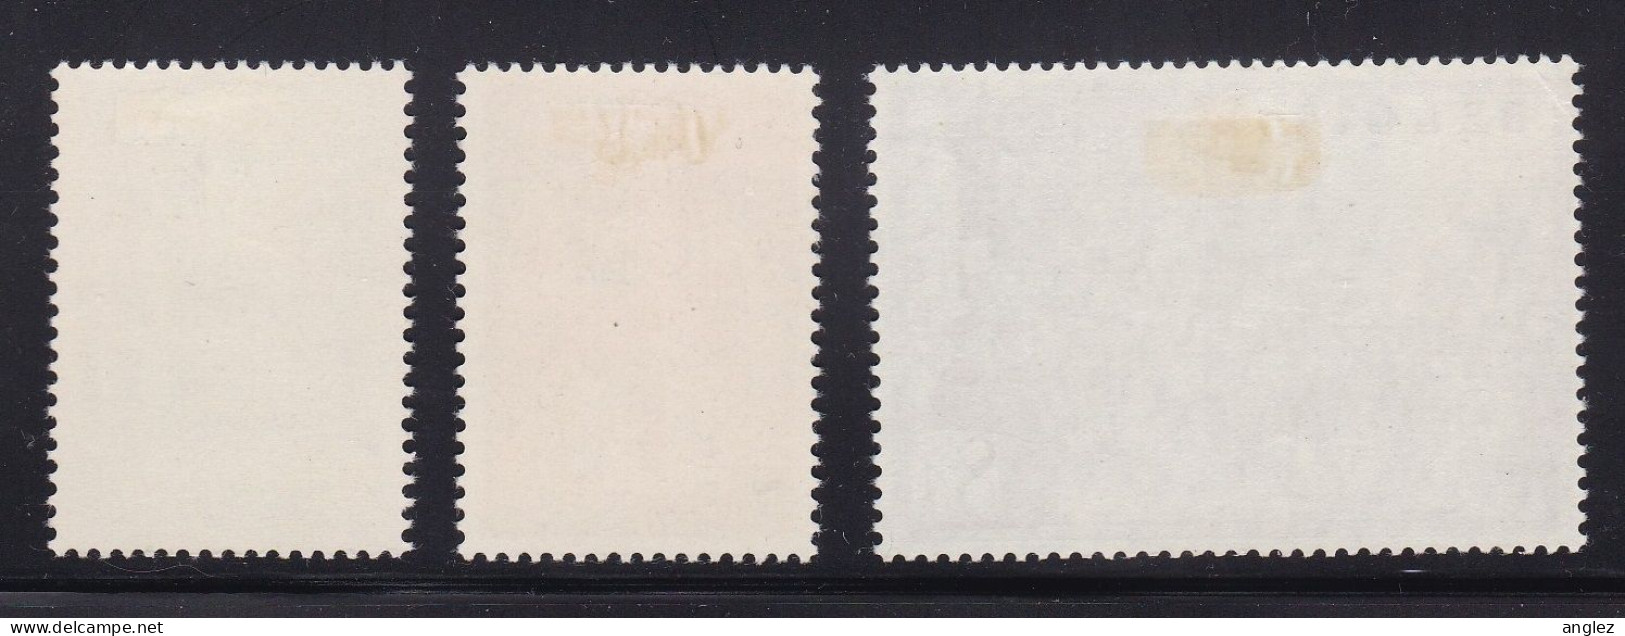 Belgium - 1952 Koekelberg Basilica Fund Charity Set 3v MH - Unused Stamps